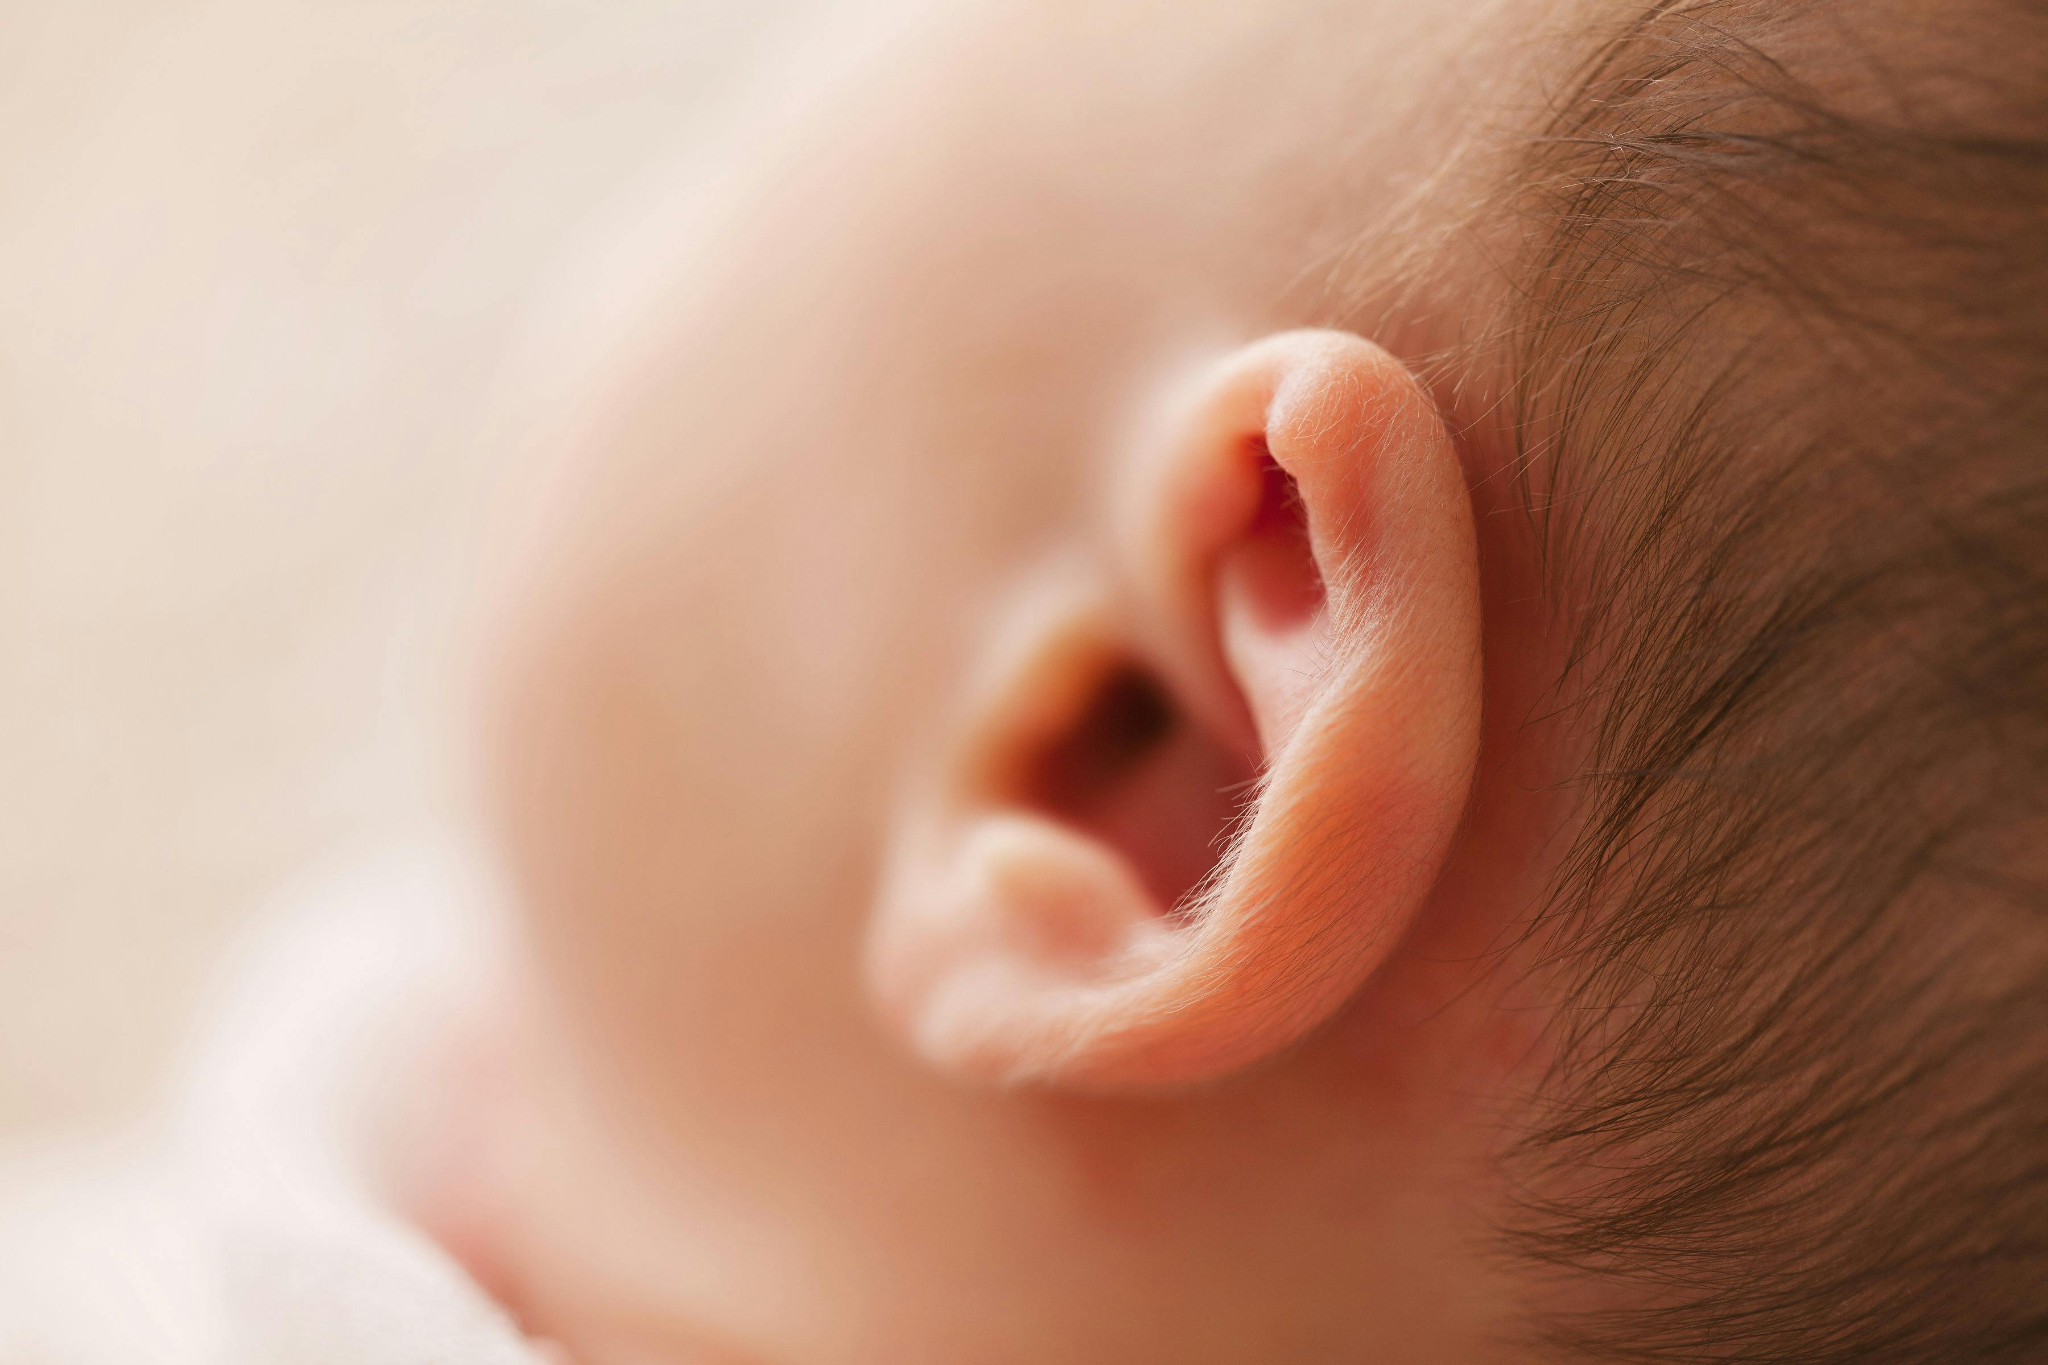 Photo of baby’s ear - Microtia in baby - babyjourney.net